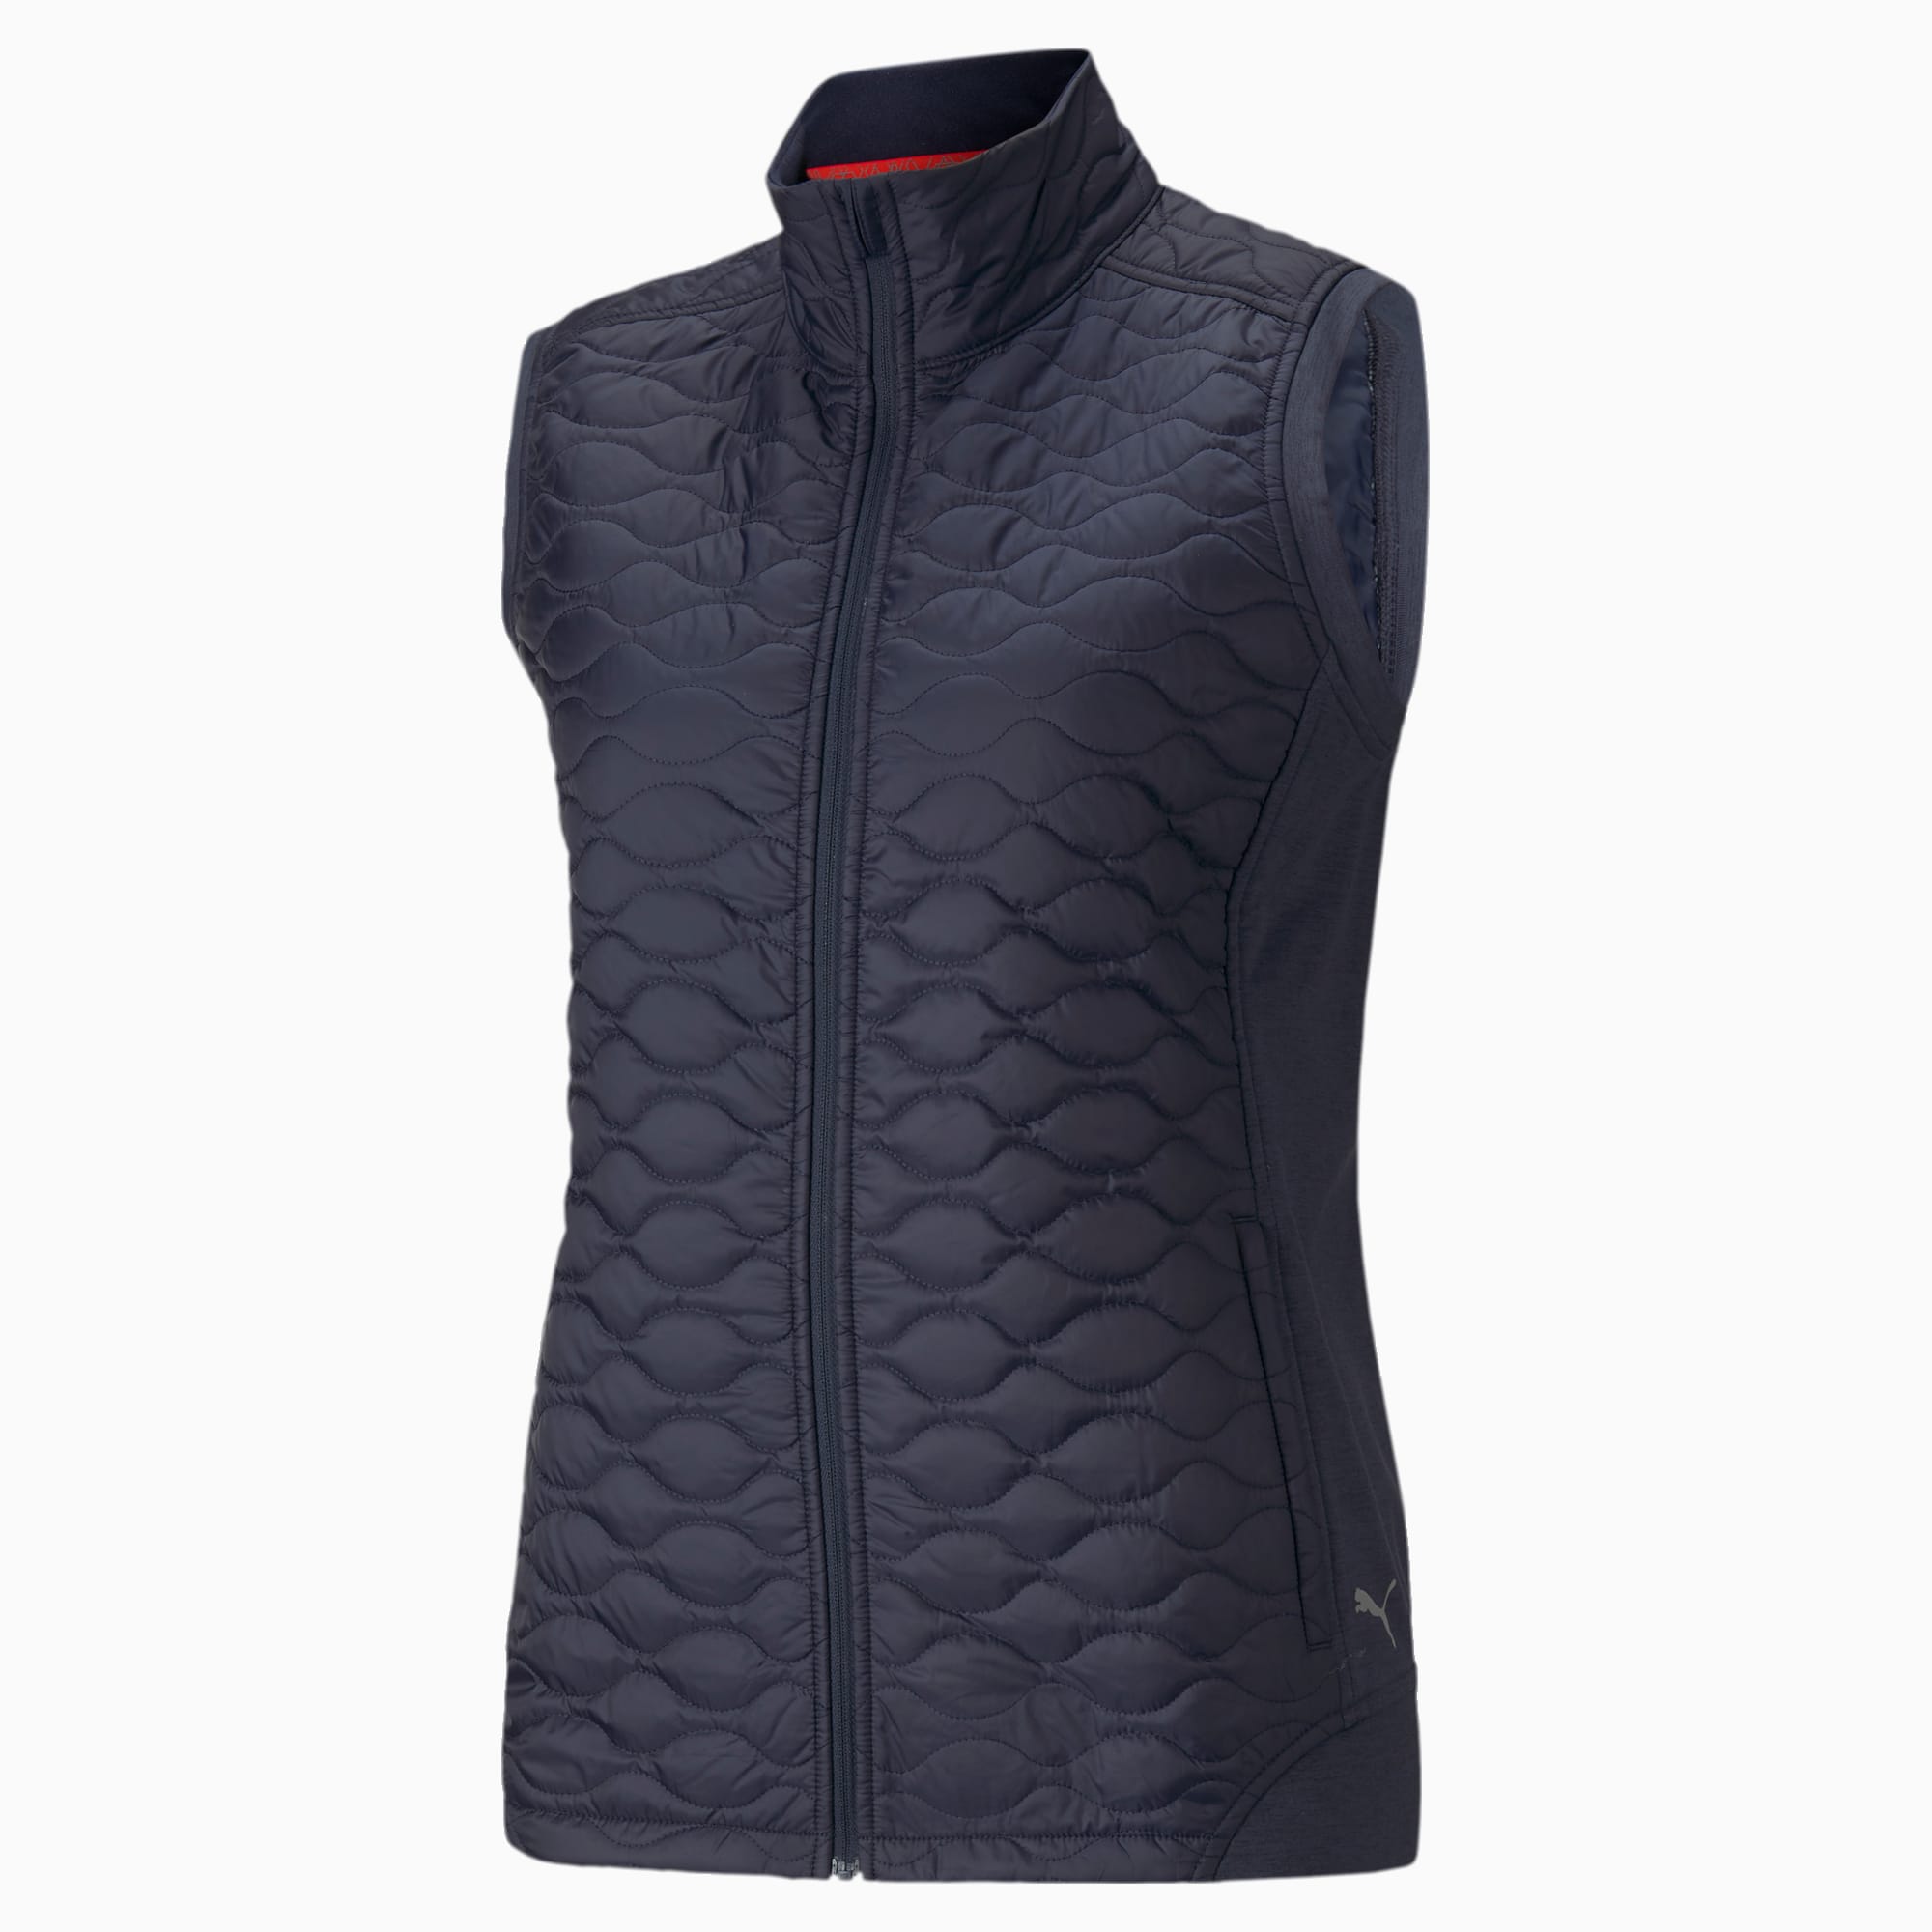 PUMA Cloudspun Wrmlbl Women's Golf Vest Women's Jacket, Dark Blue, Size XS, Clothing